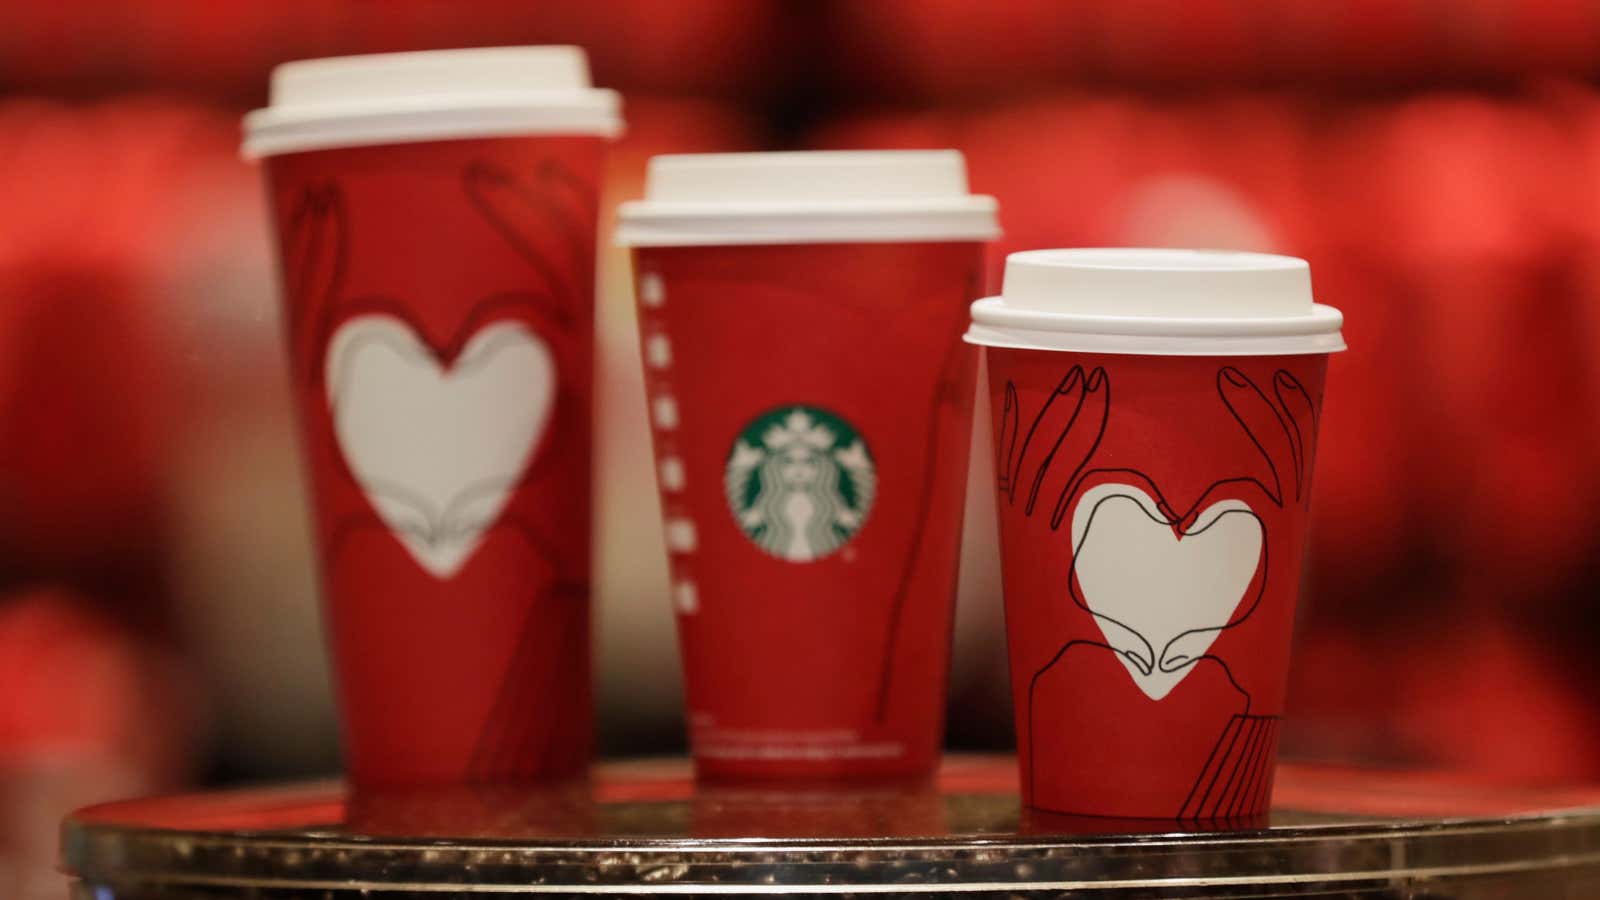 Starbucks is shutting down 8,000 of its stores for mandatory racial bias training.